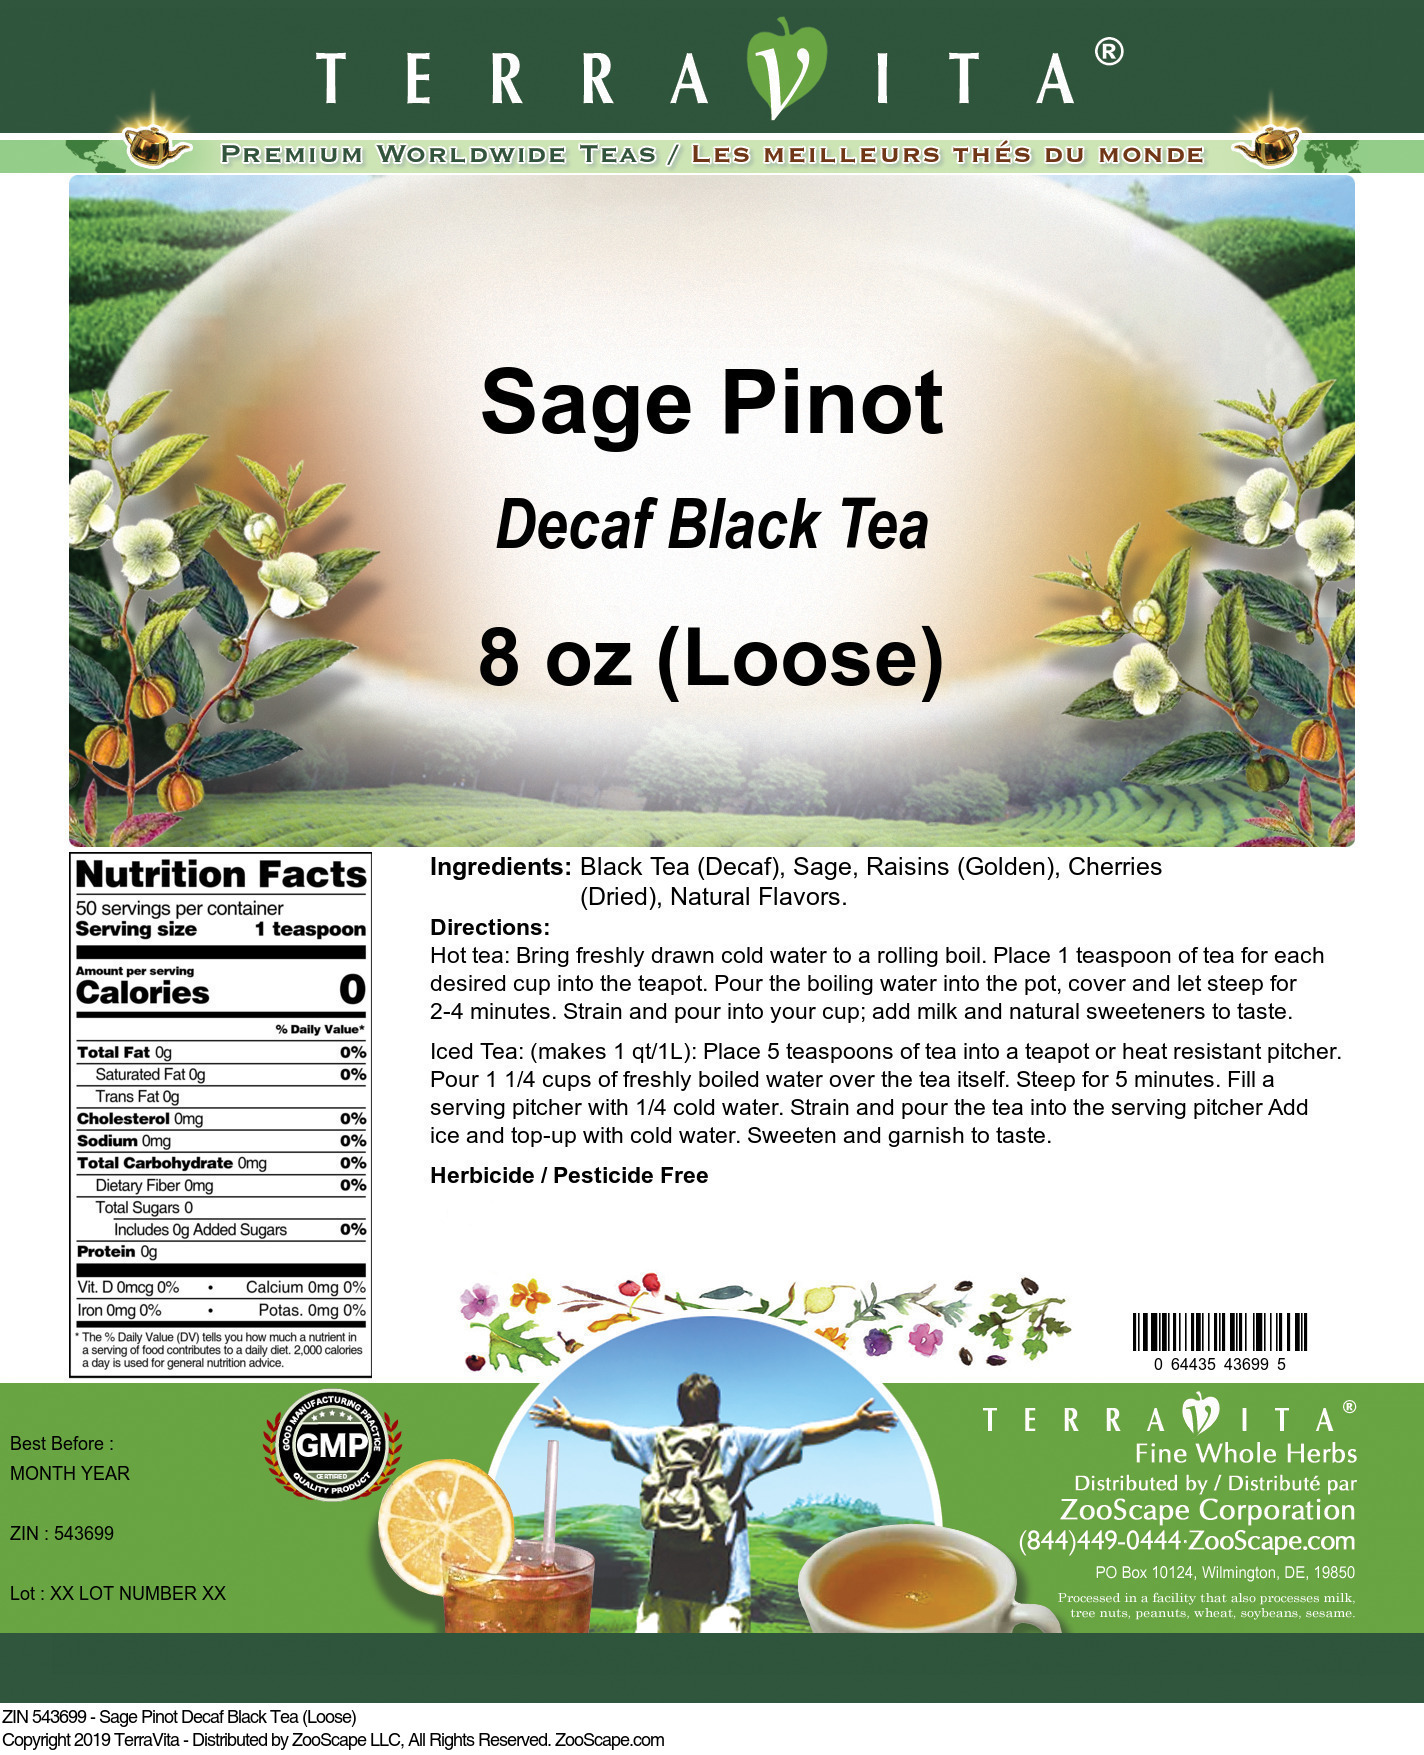 Sage Pinot Decaf Black Tea (Loose) - Label